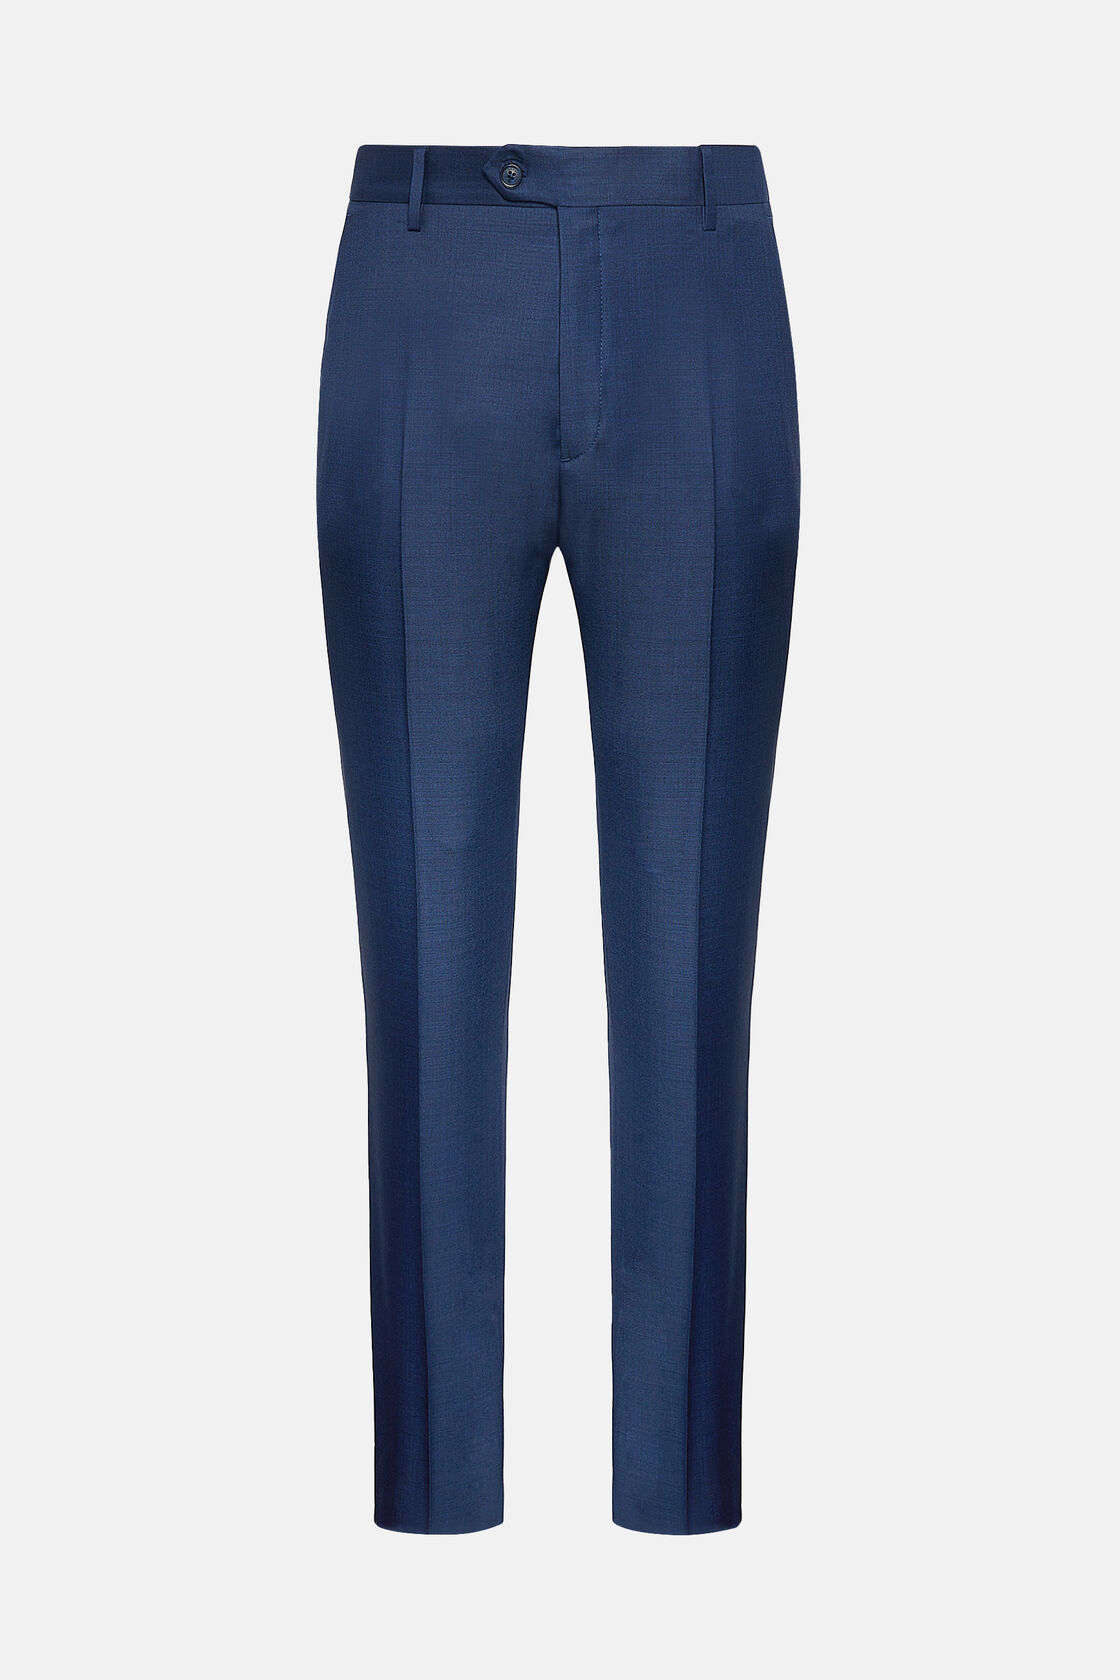 Blue Grisaille Wool Suit, , hi-res